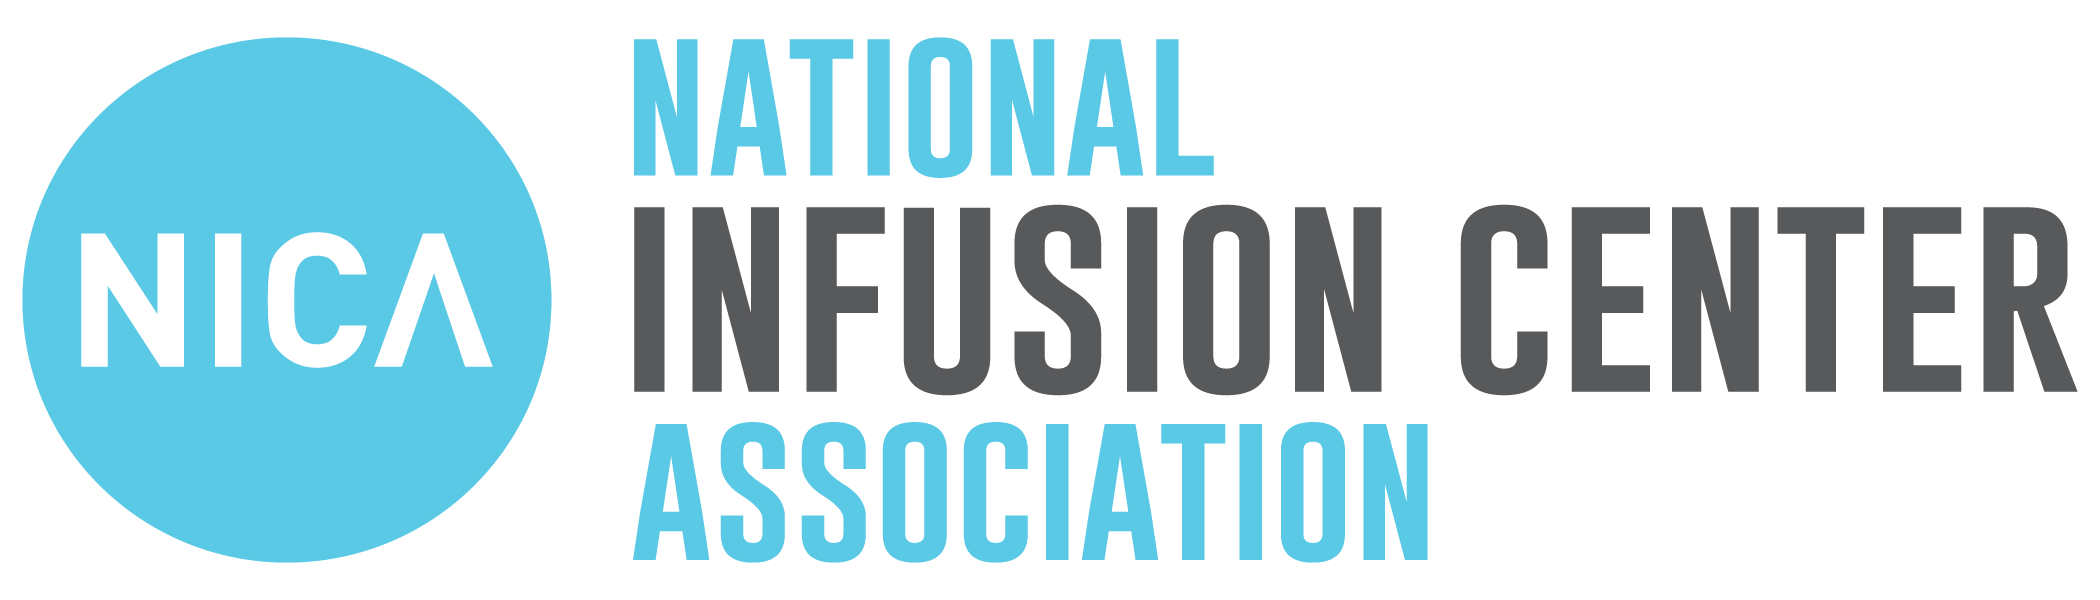 National Infusion Center Association Logo